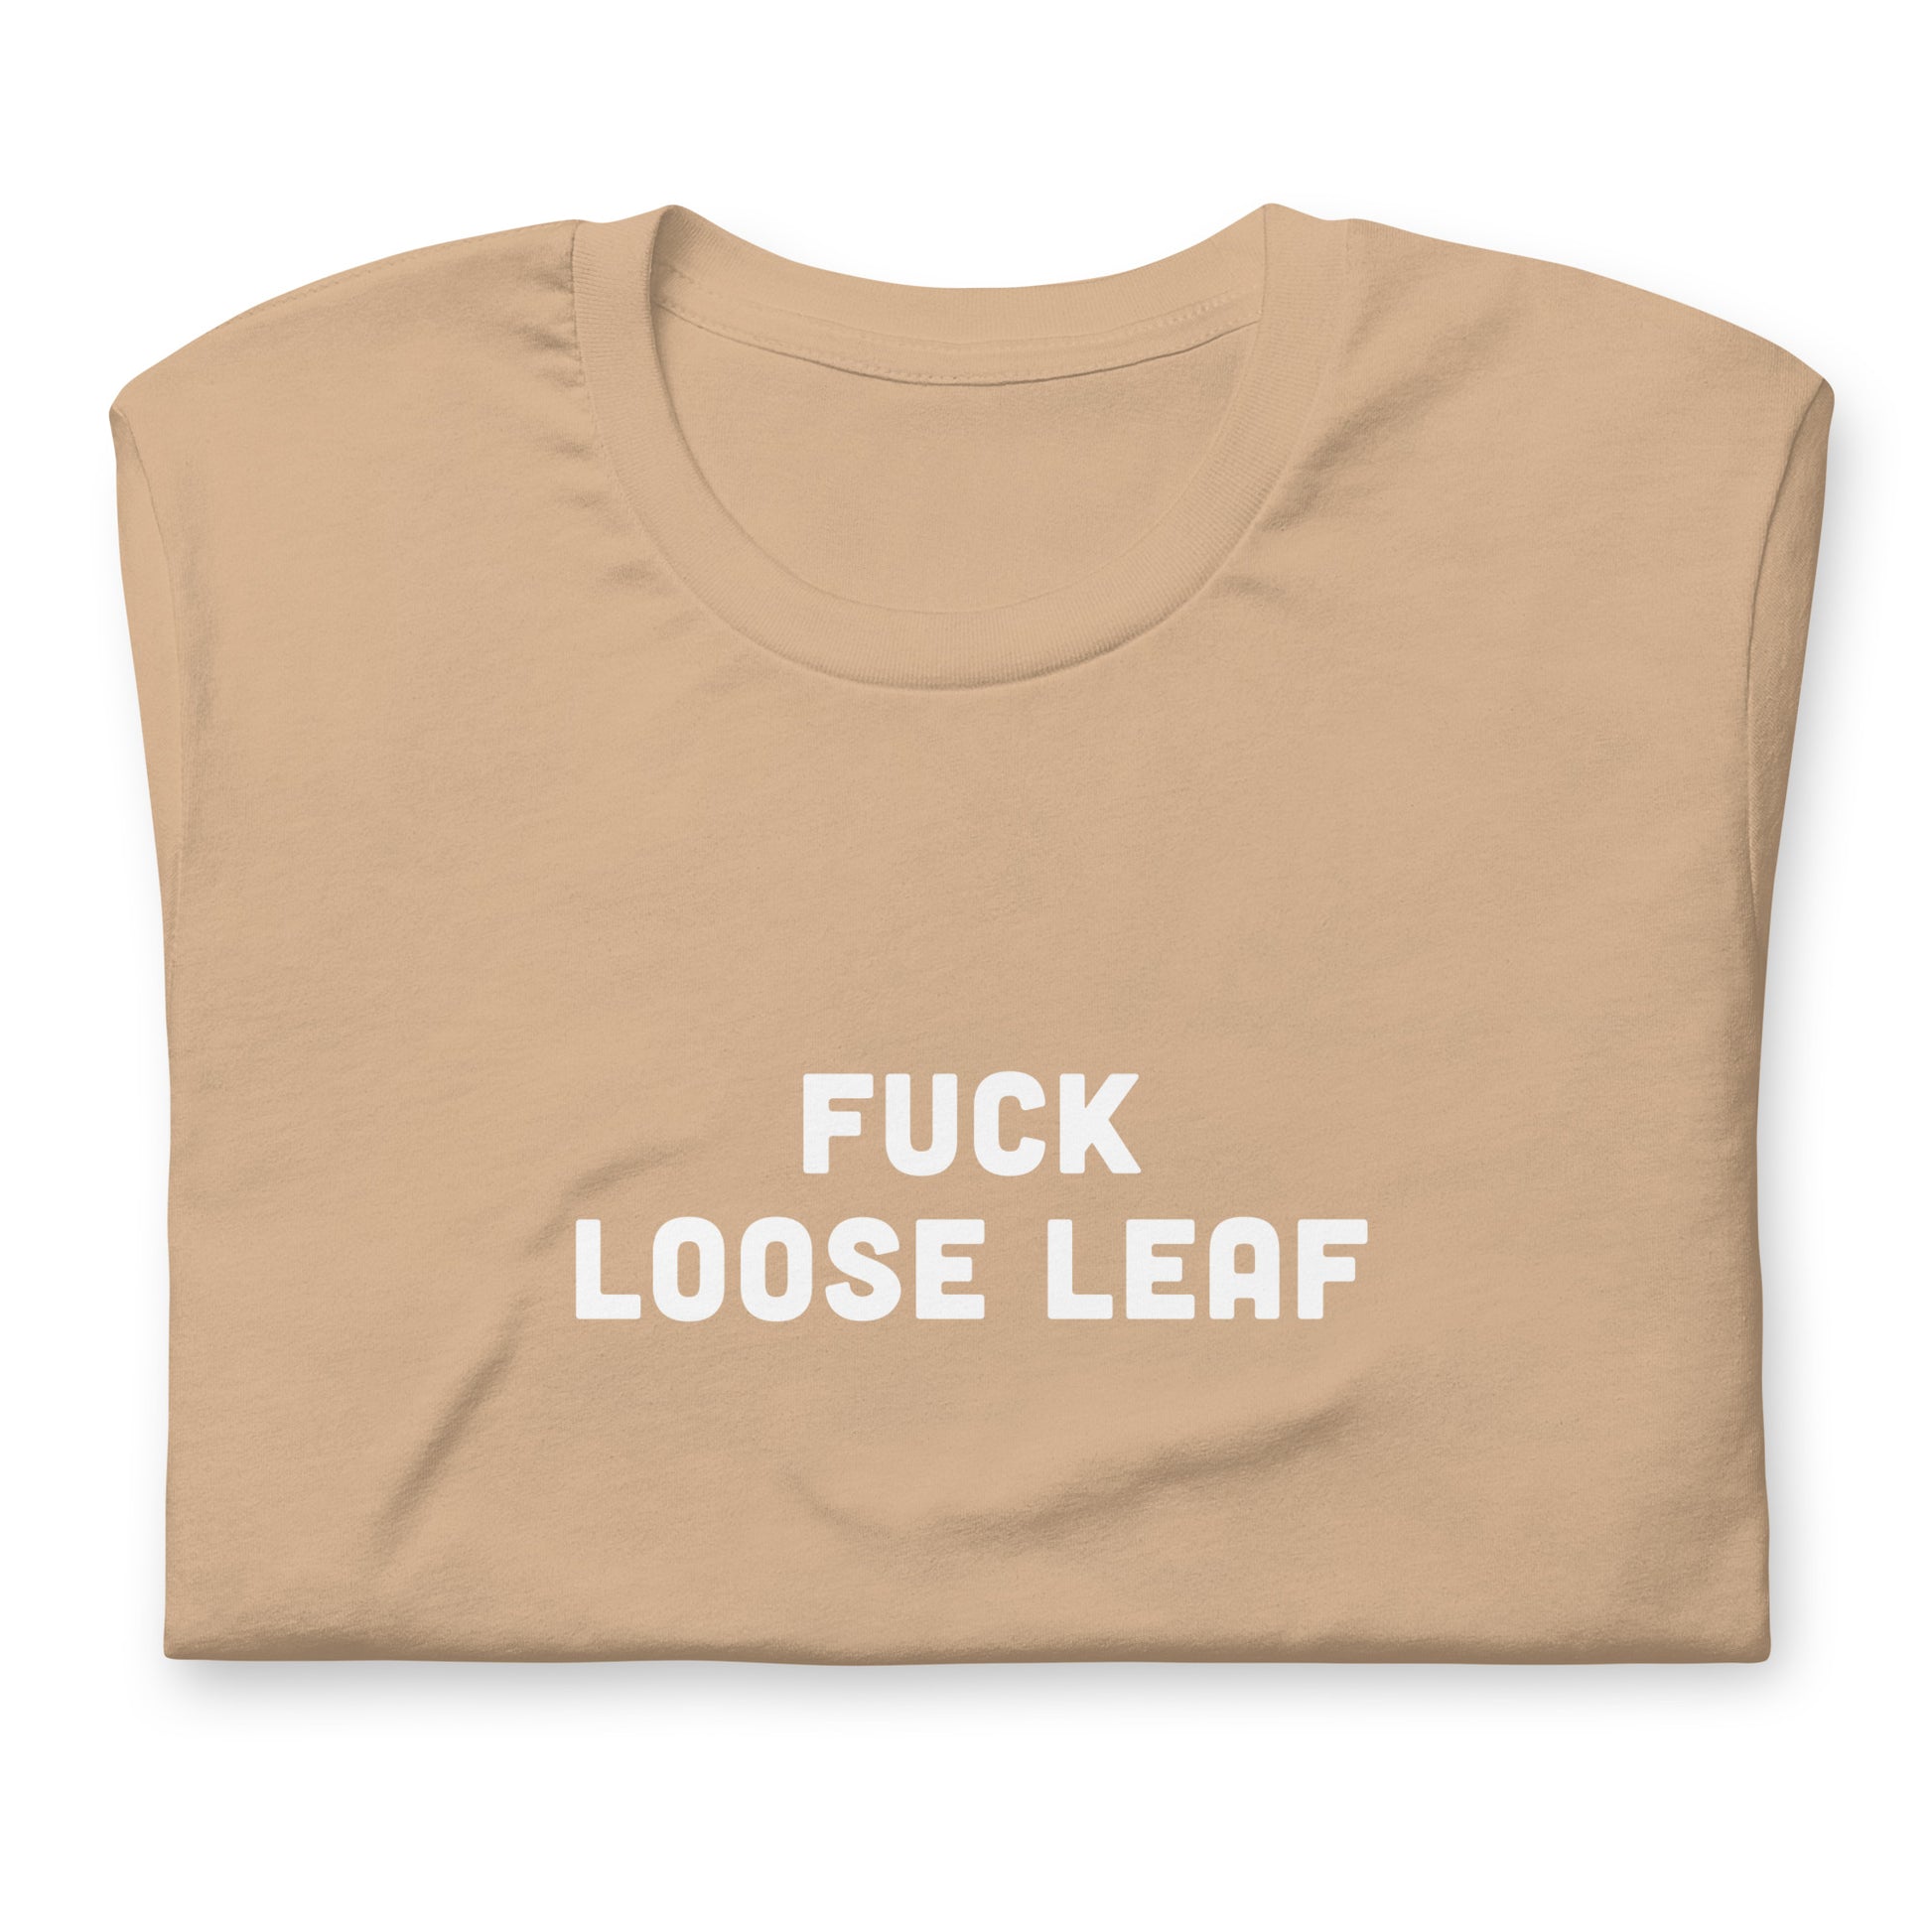 Fuck Loose Leaf T-Shirt Size XL Color Forest